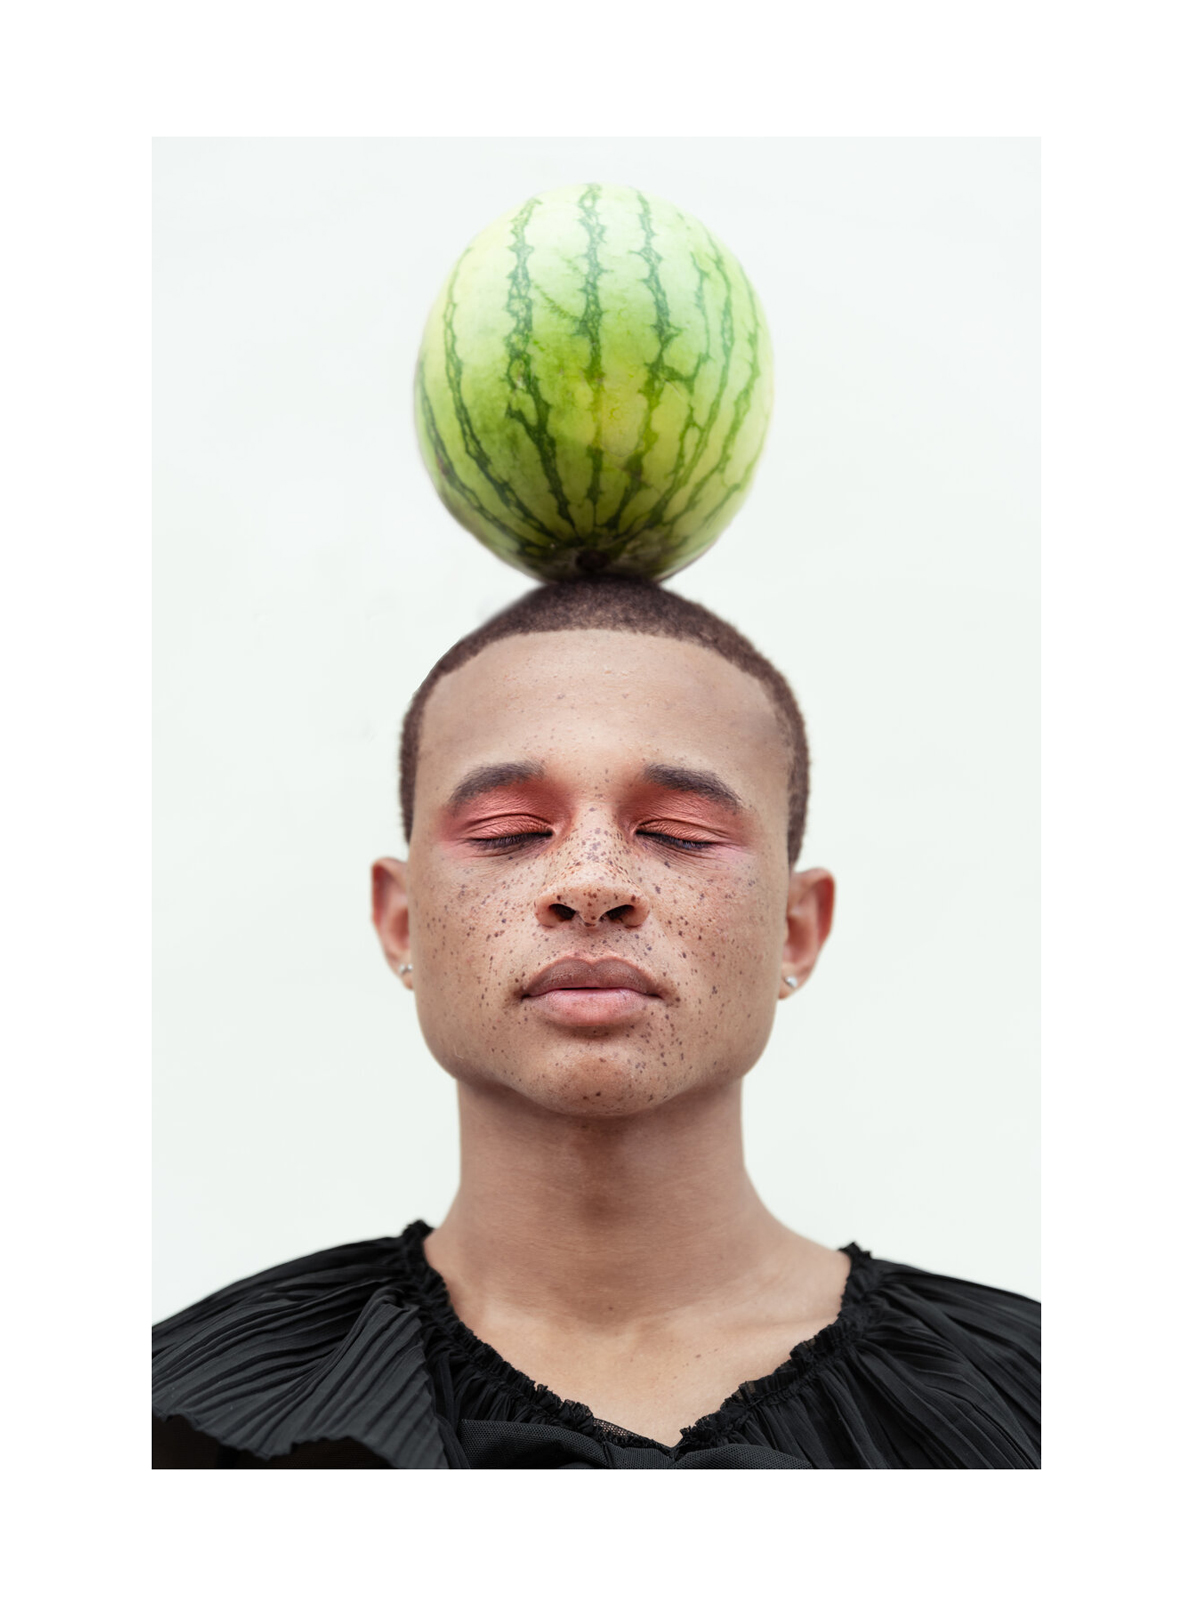 Photo by Molly Olwig of man balancing watermelon on head